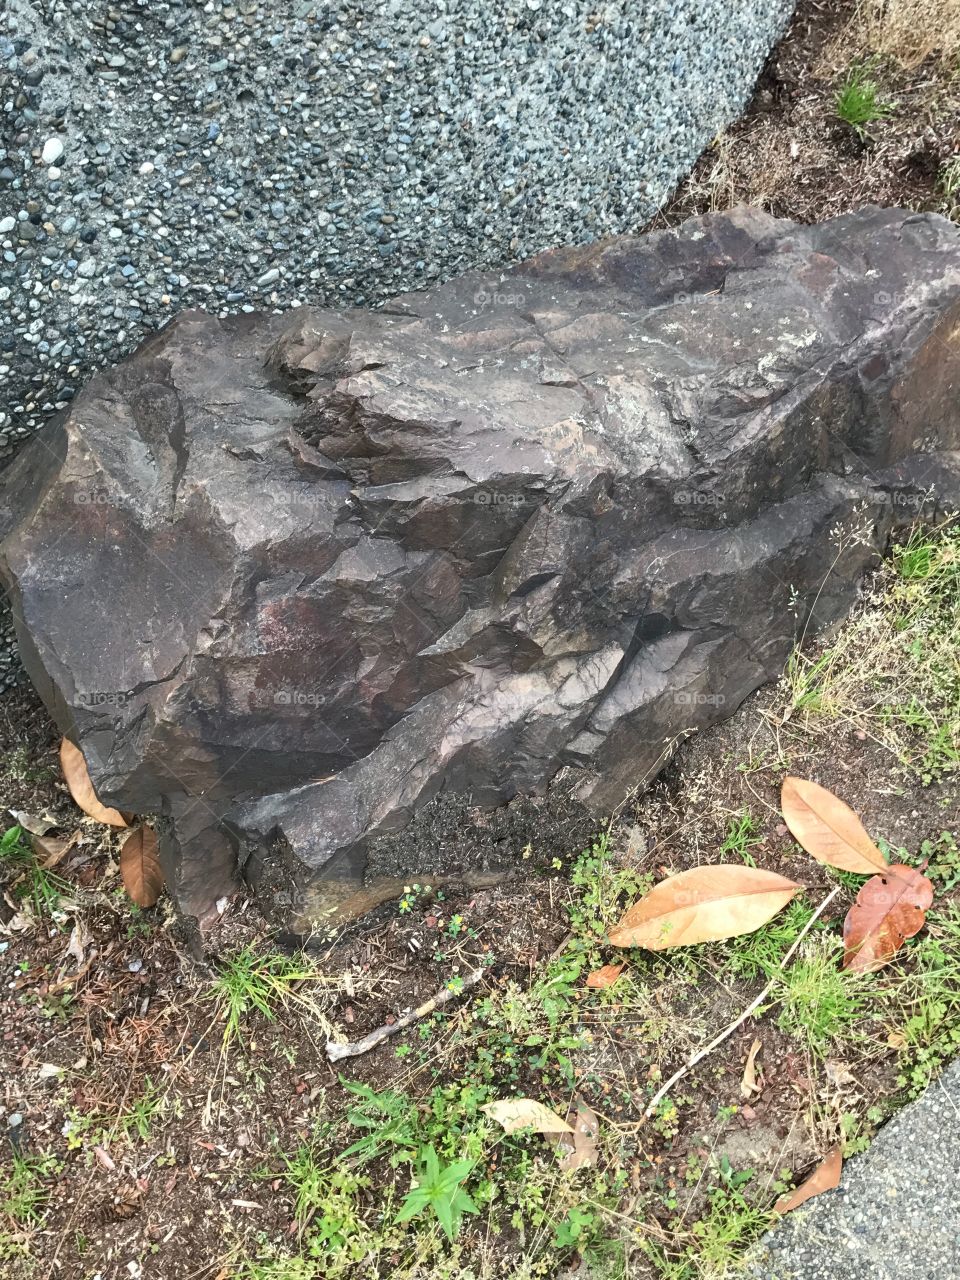 An interesting looking rock